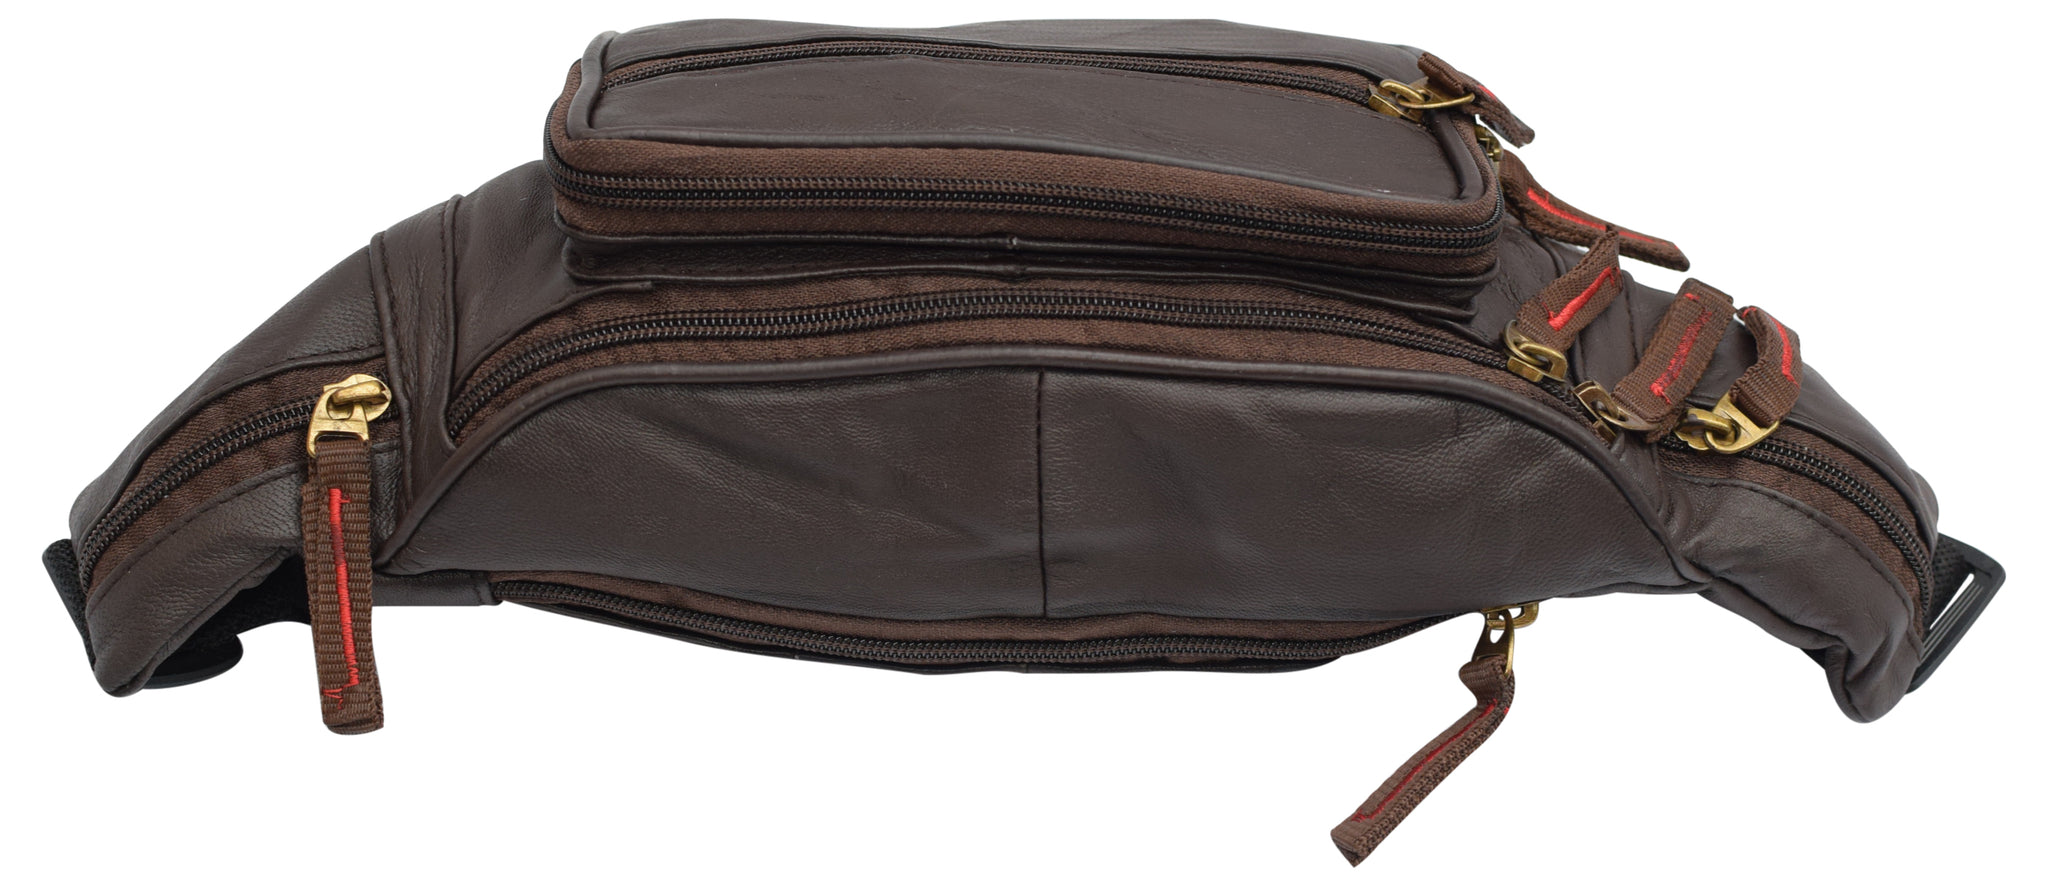 Voguele Mens Leather Waist Bag Pack Hip Bum Bag Belt Bag Travel Pouch for  Men Women - Multiple Pockets & Zippers for Hiking Running Cycling 